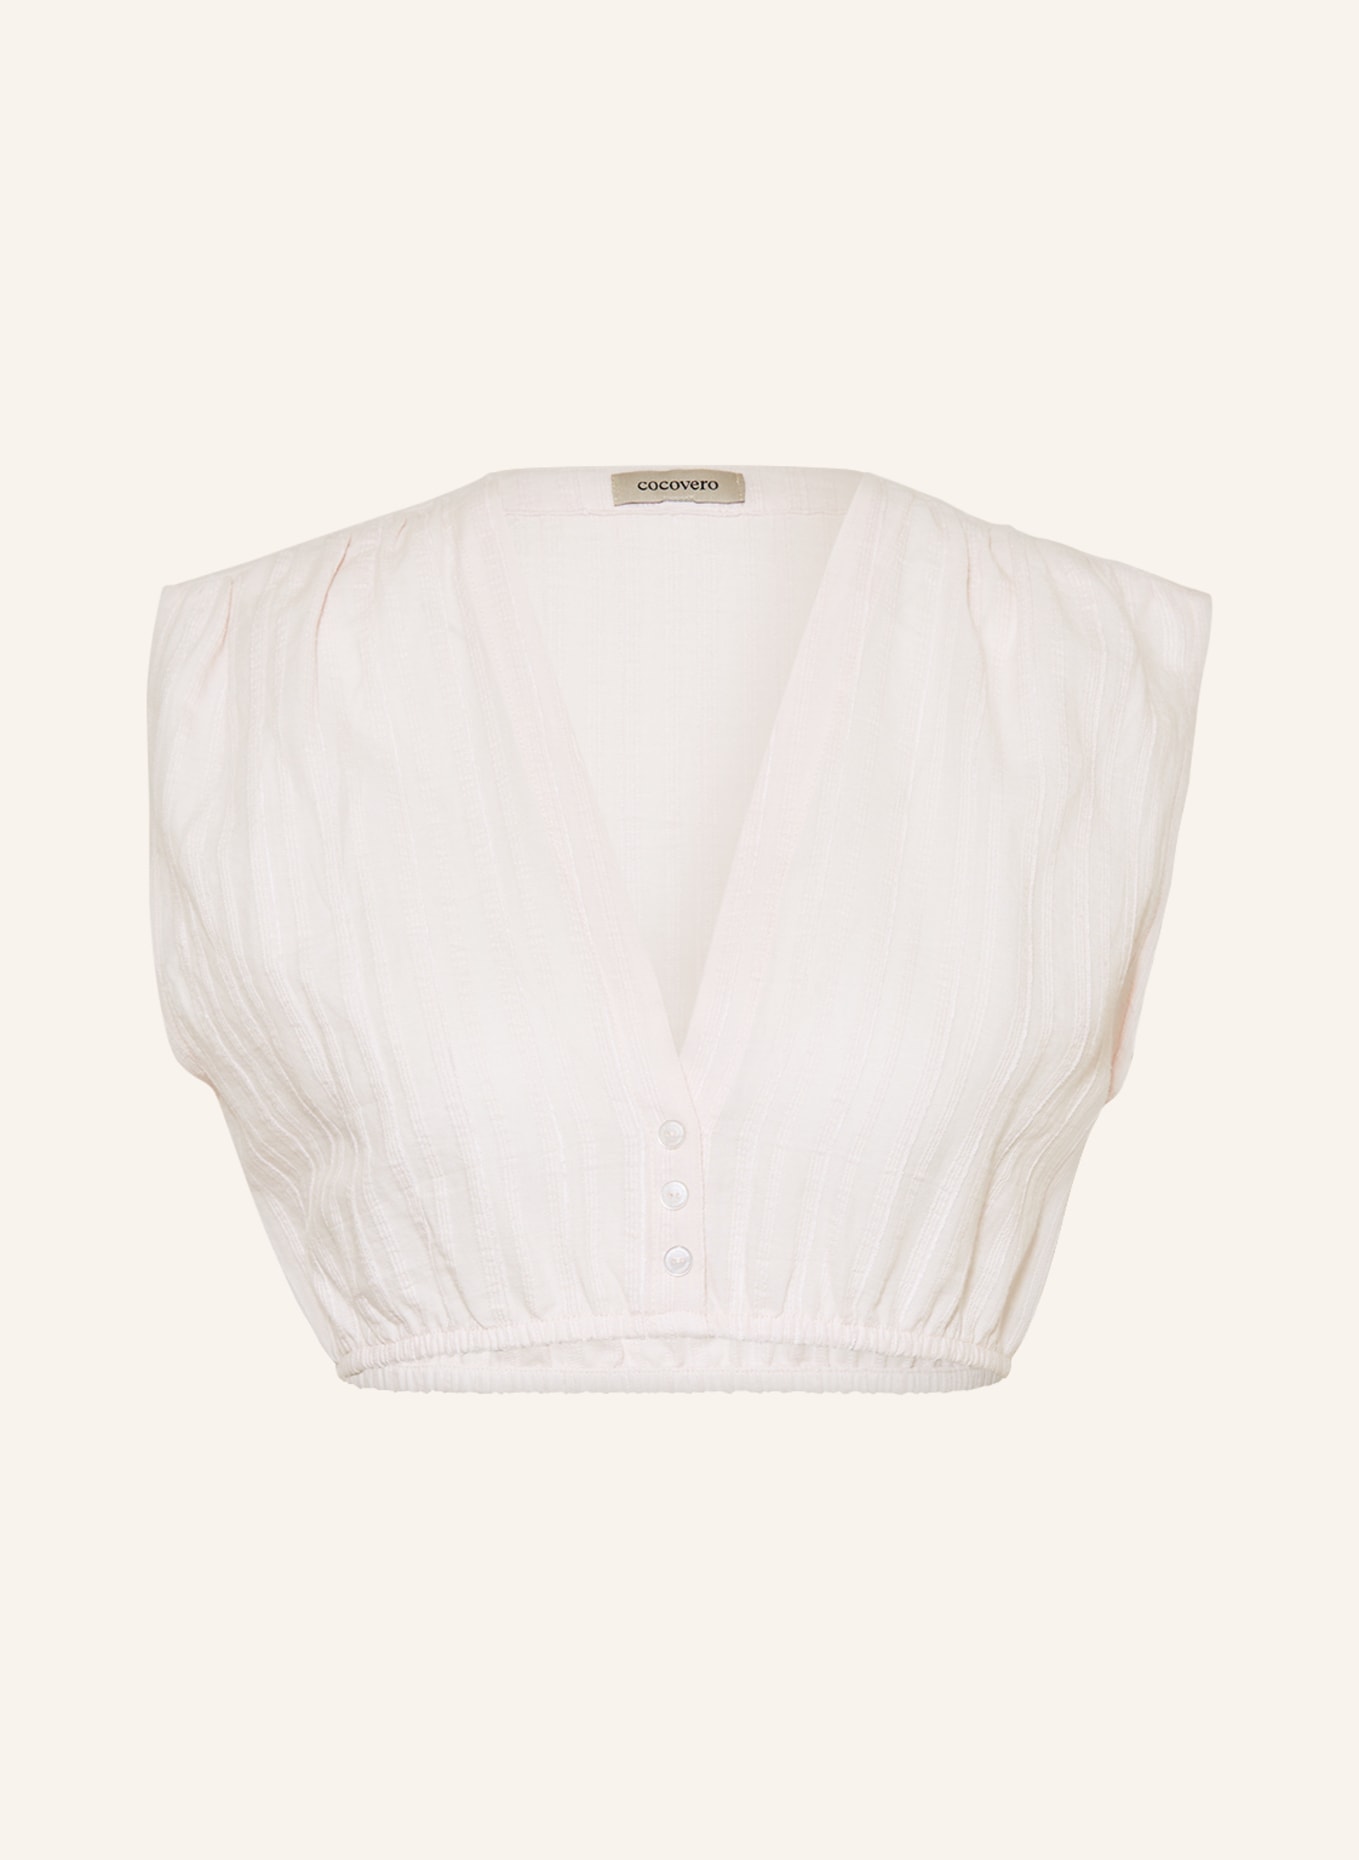 CocoVero Dirndl blouse KELLY, Color: LIGHT PINK (Image 1)